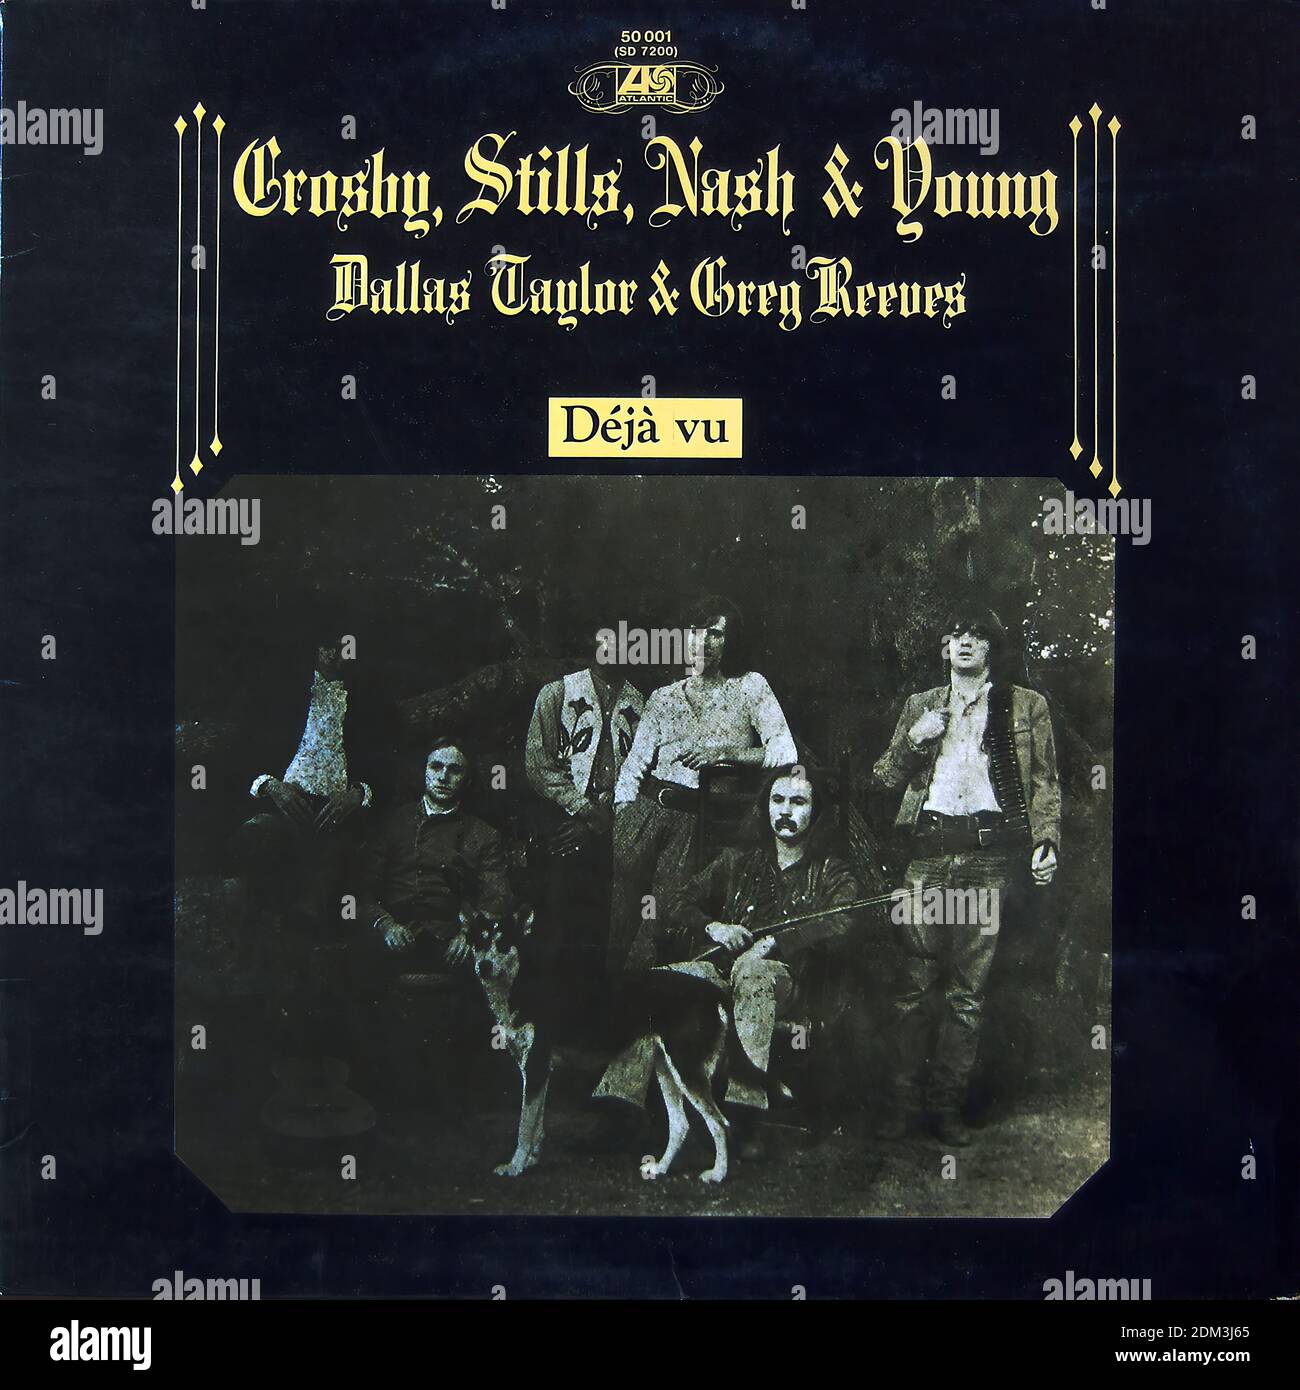 Crosby, Stills, Nash & Young - Deja Vu, Atlantic 50 001, (SD 7200) - Vintage vinyl album cover Stock Photo